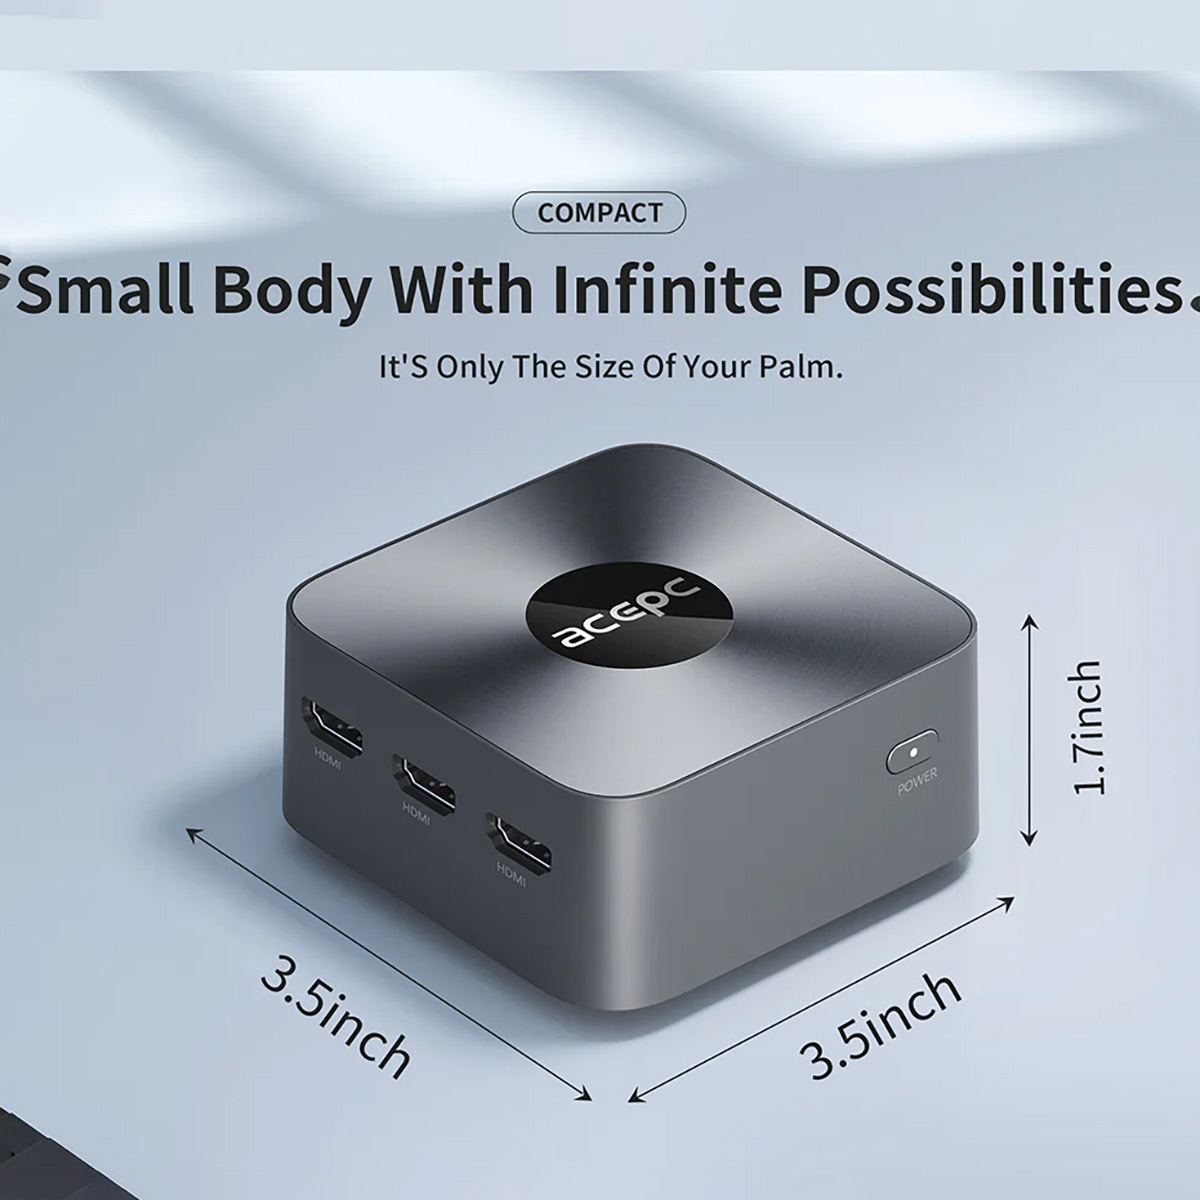 PicoBox Mini Mini PC Marketing